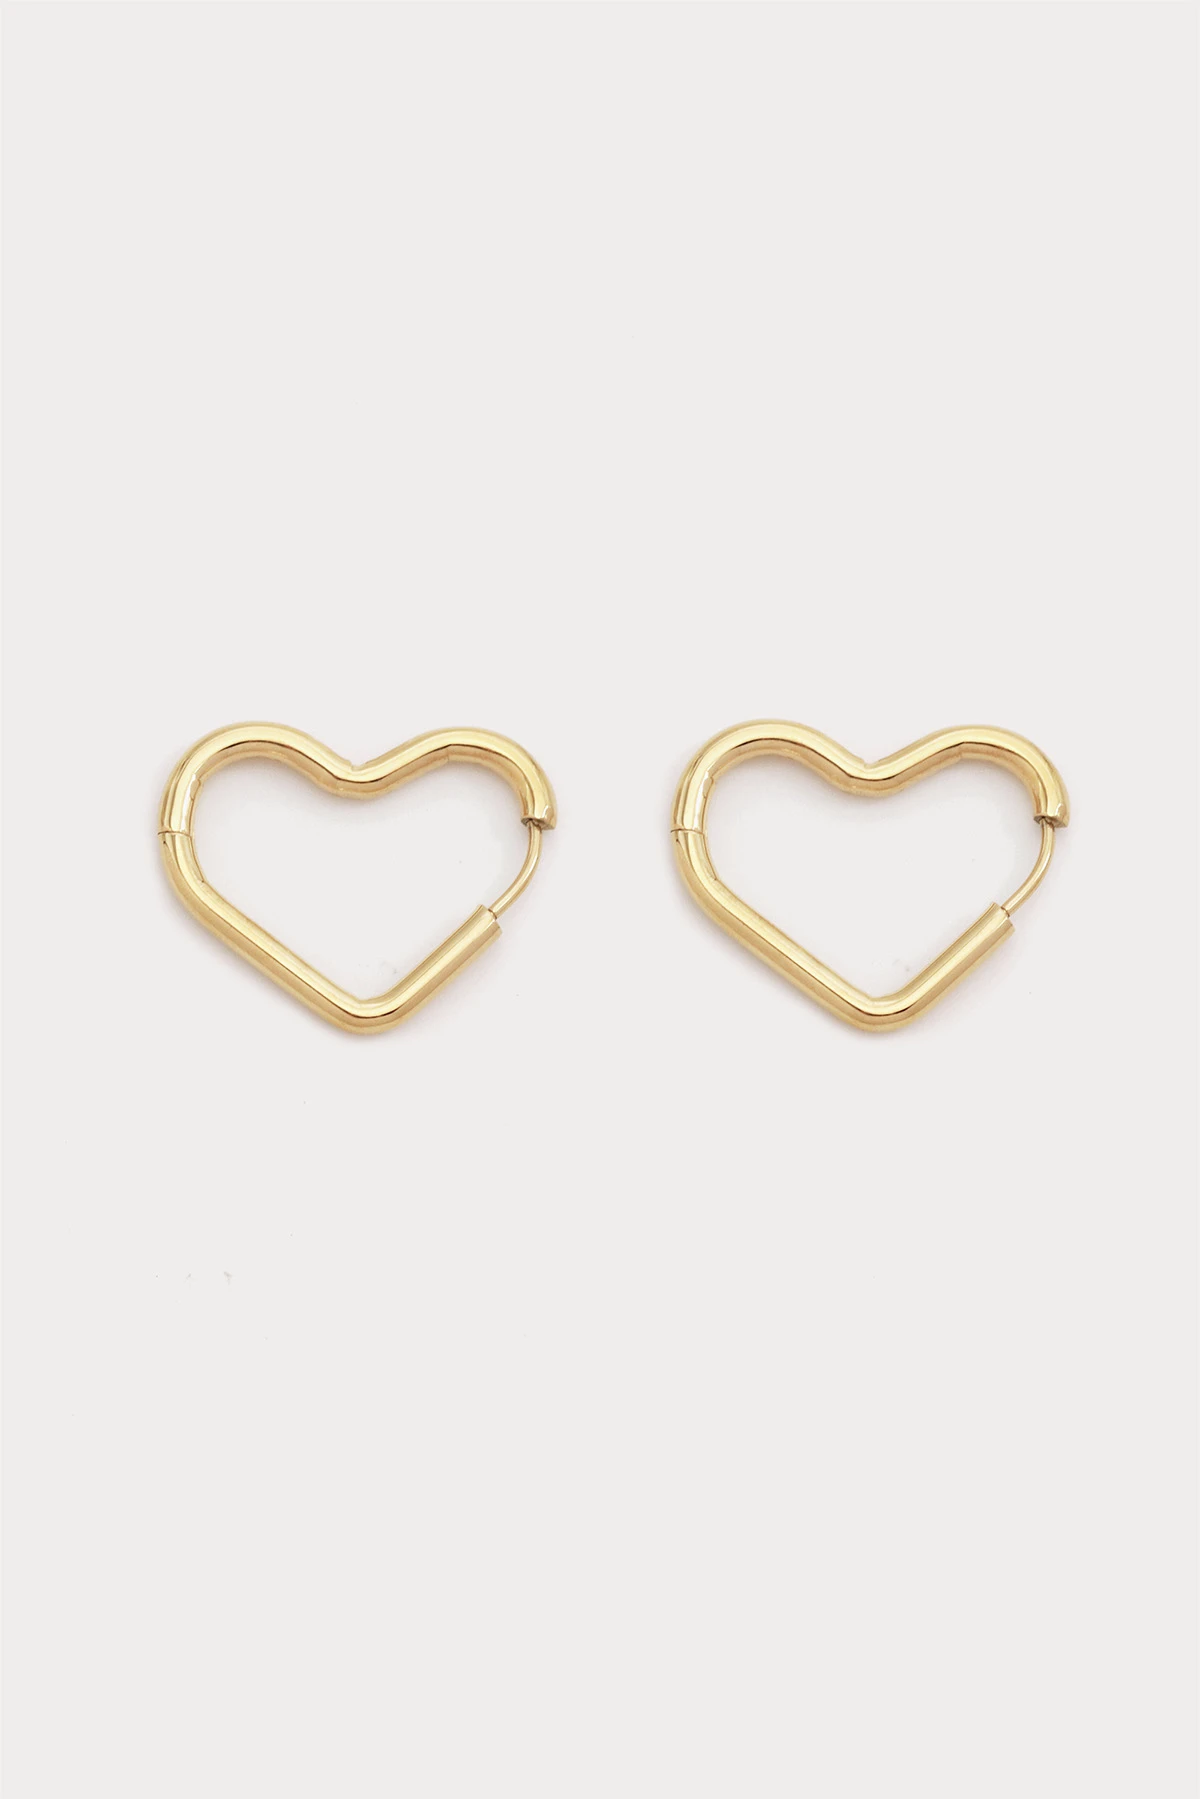 Petit Moments - Umbria Earrings - Gold